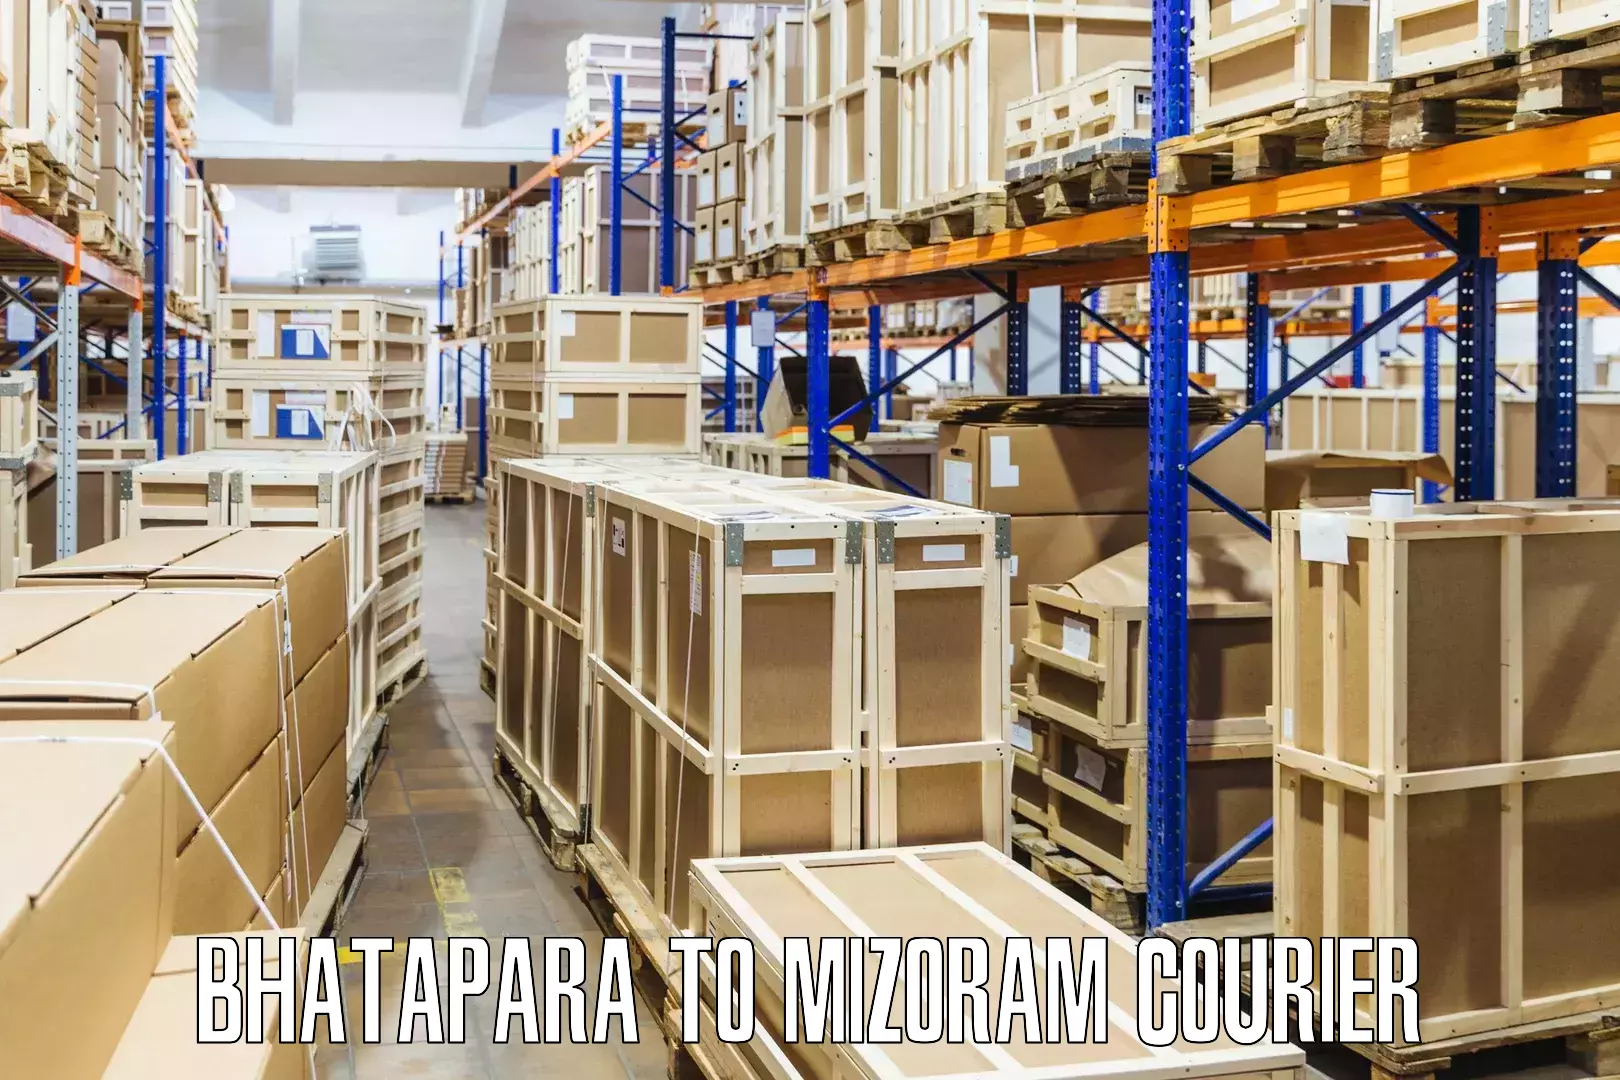 Scheduled delivery Bhatapara to Serchhip